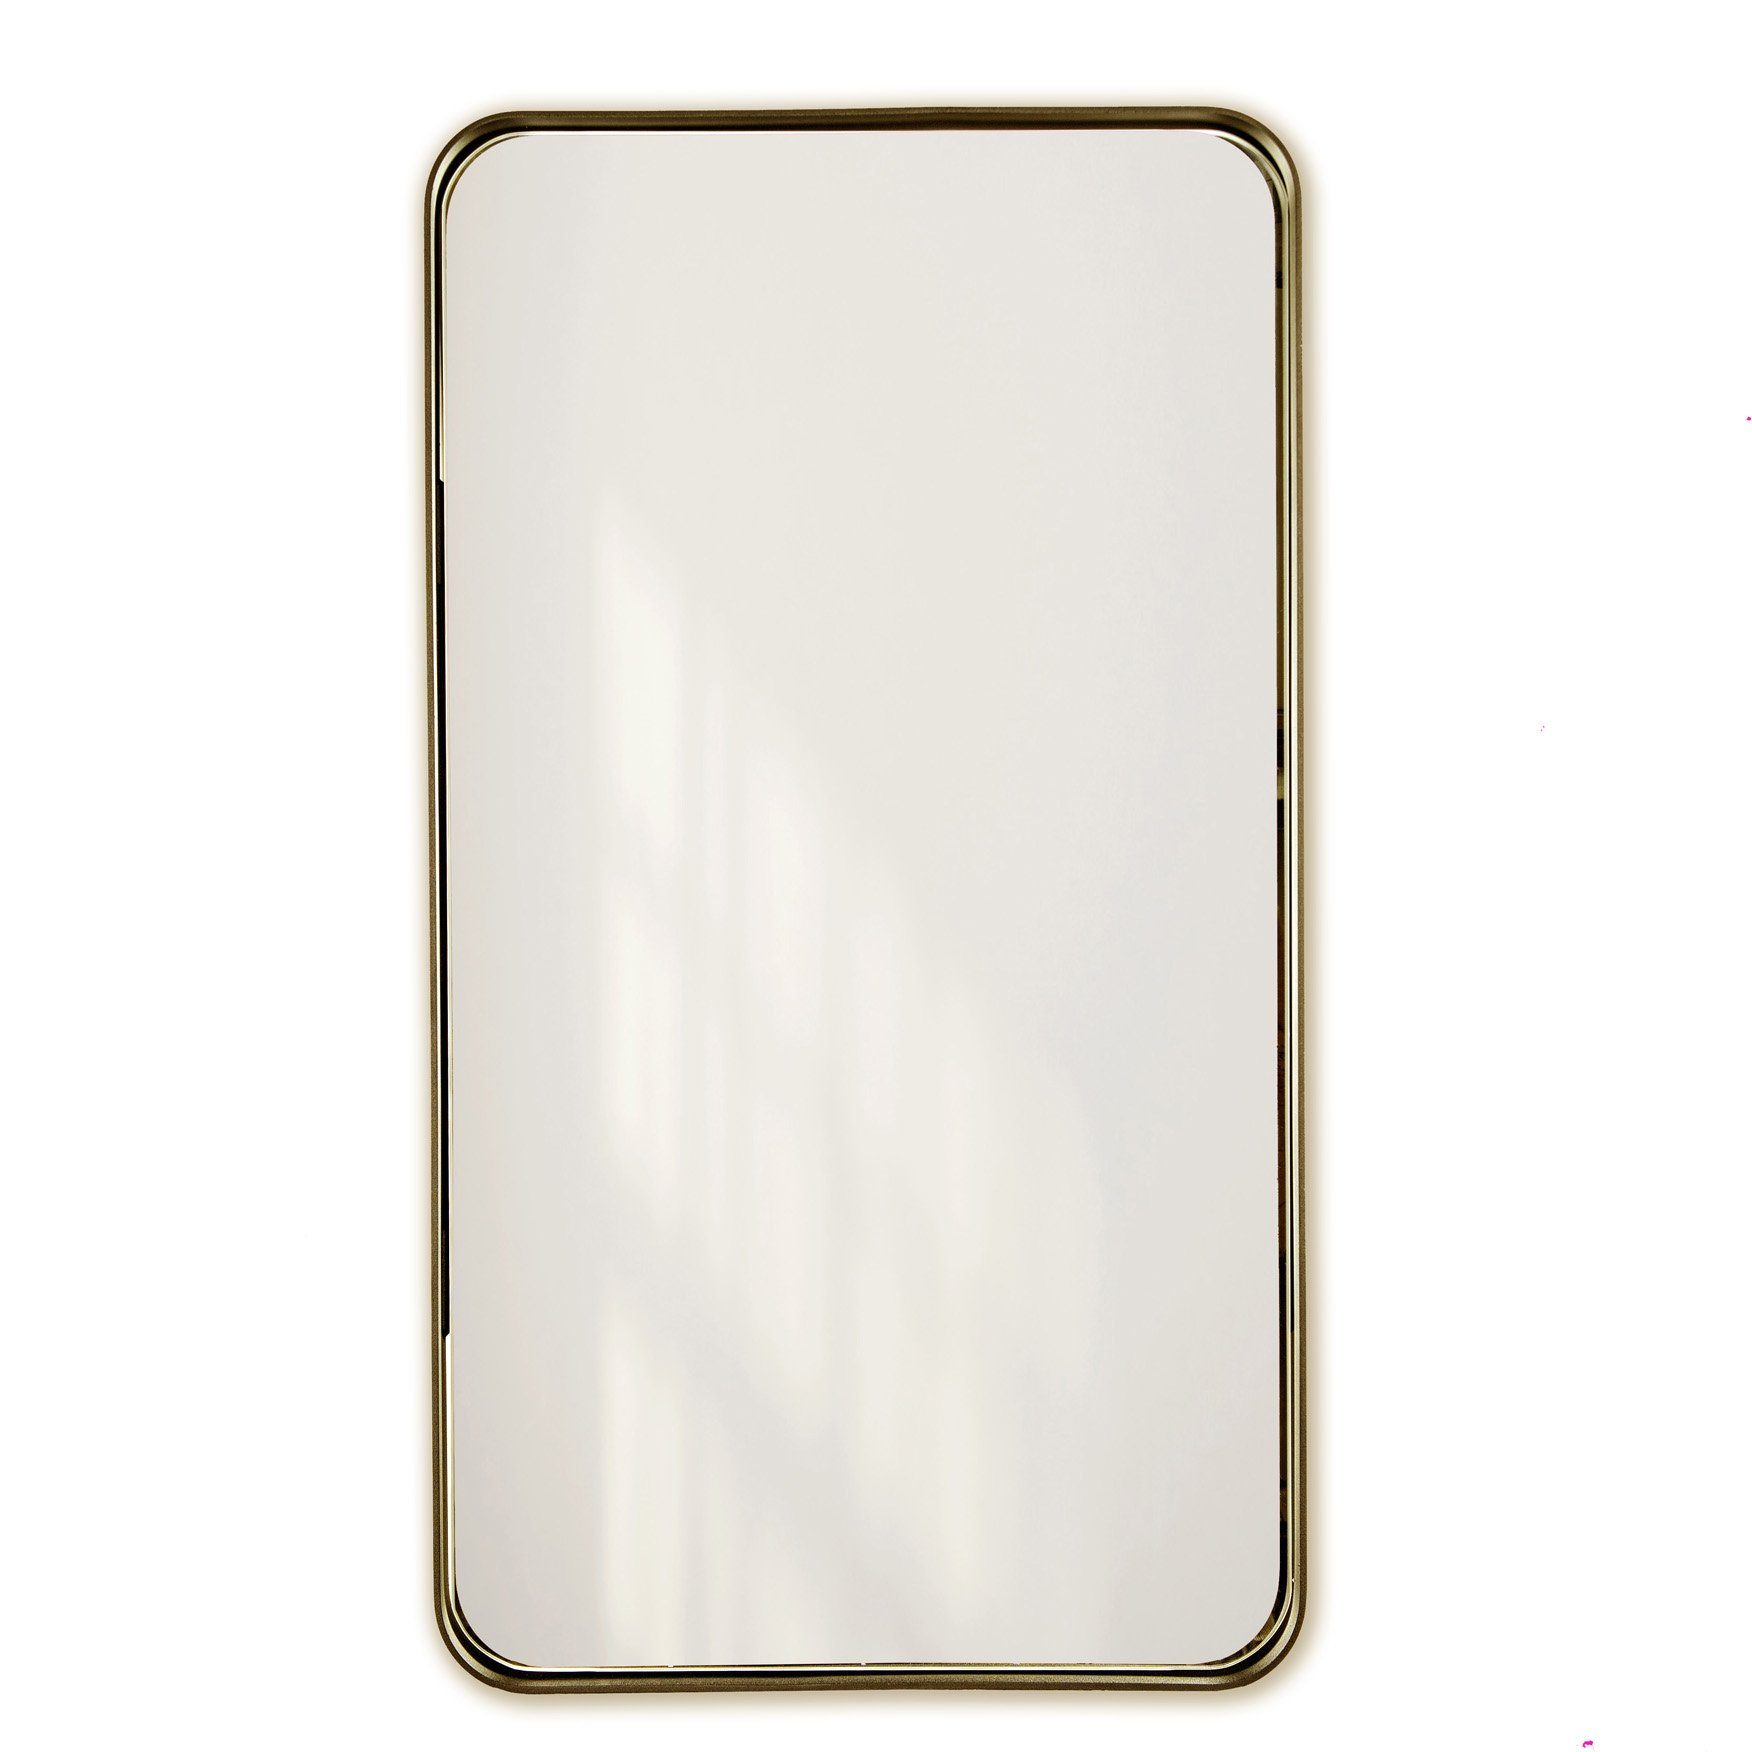 More2Home Wandspiegel OVALIS Gold M, Rahmen Stahl vintage gold, B/H/T: ca. 50 x 90 x 5 cm